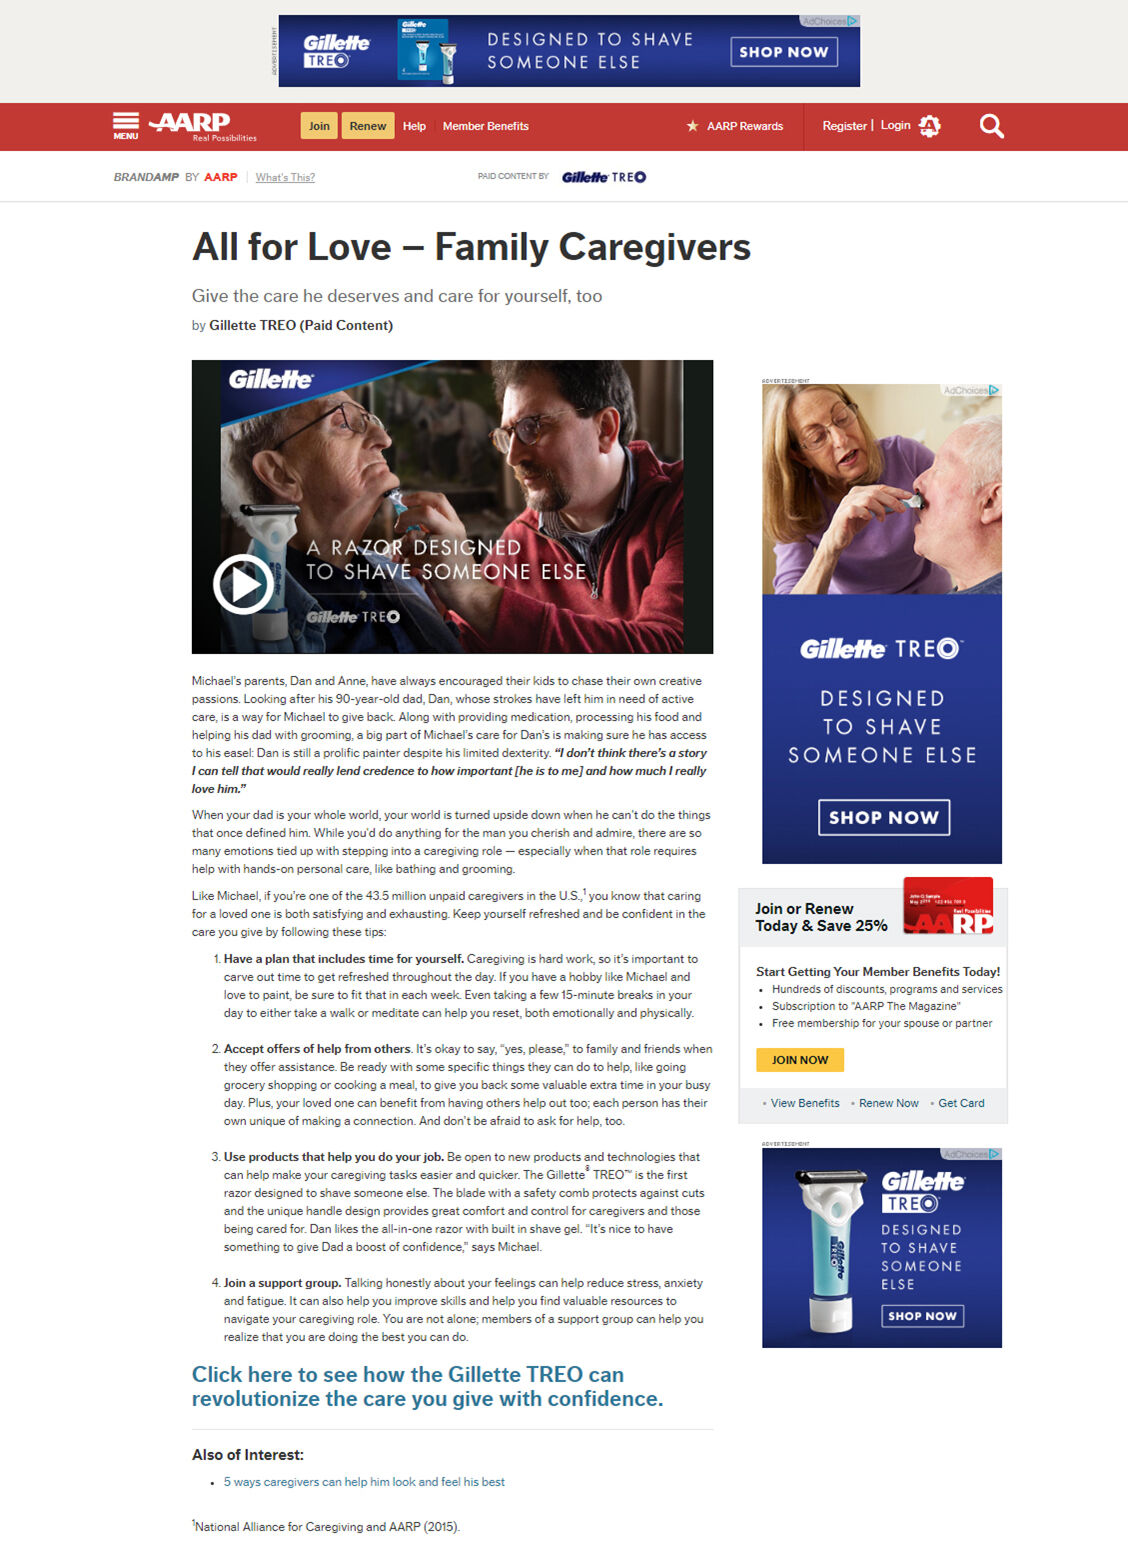 All for Love Family Caregivers Desktop